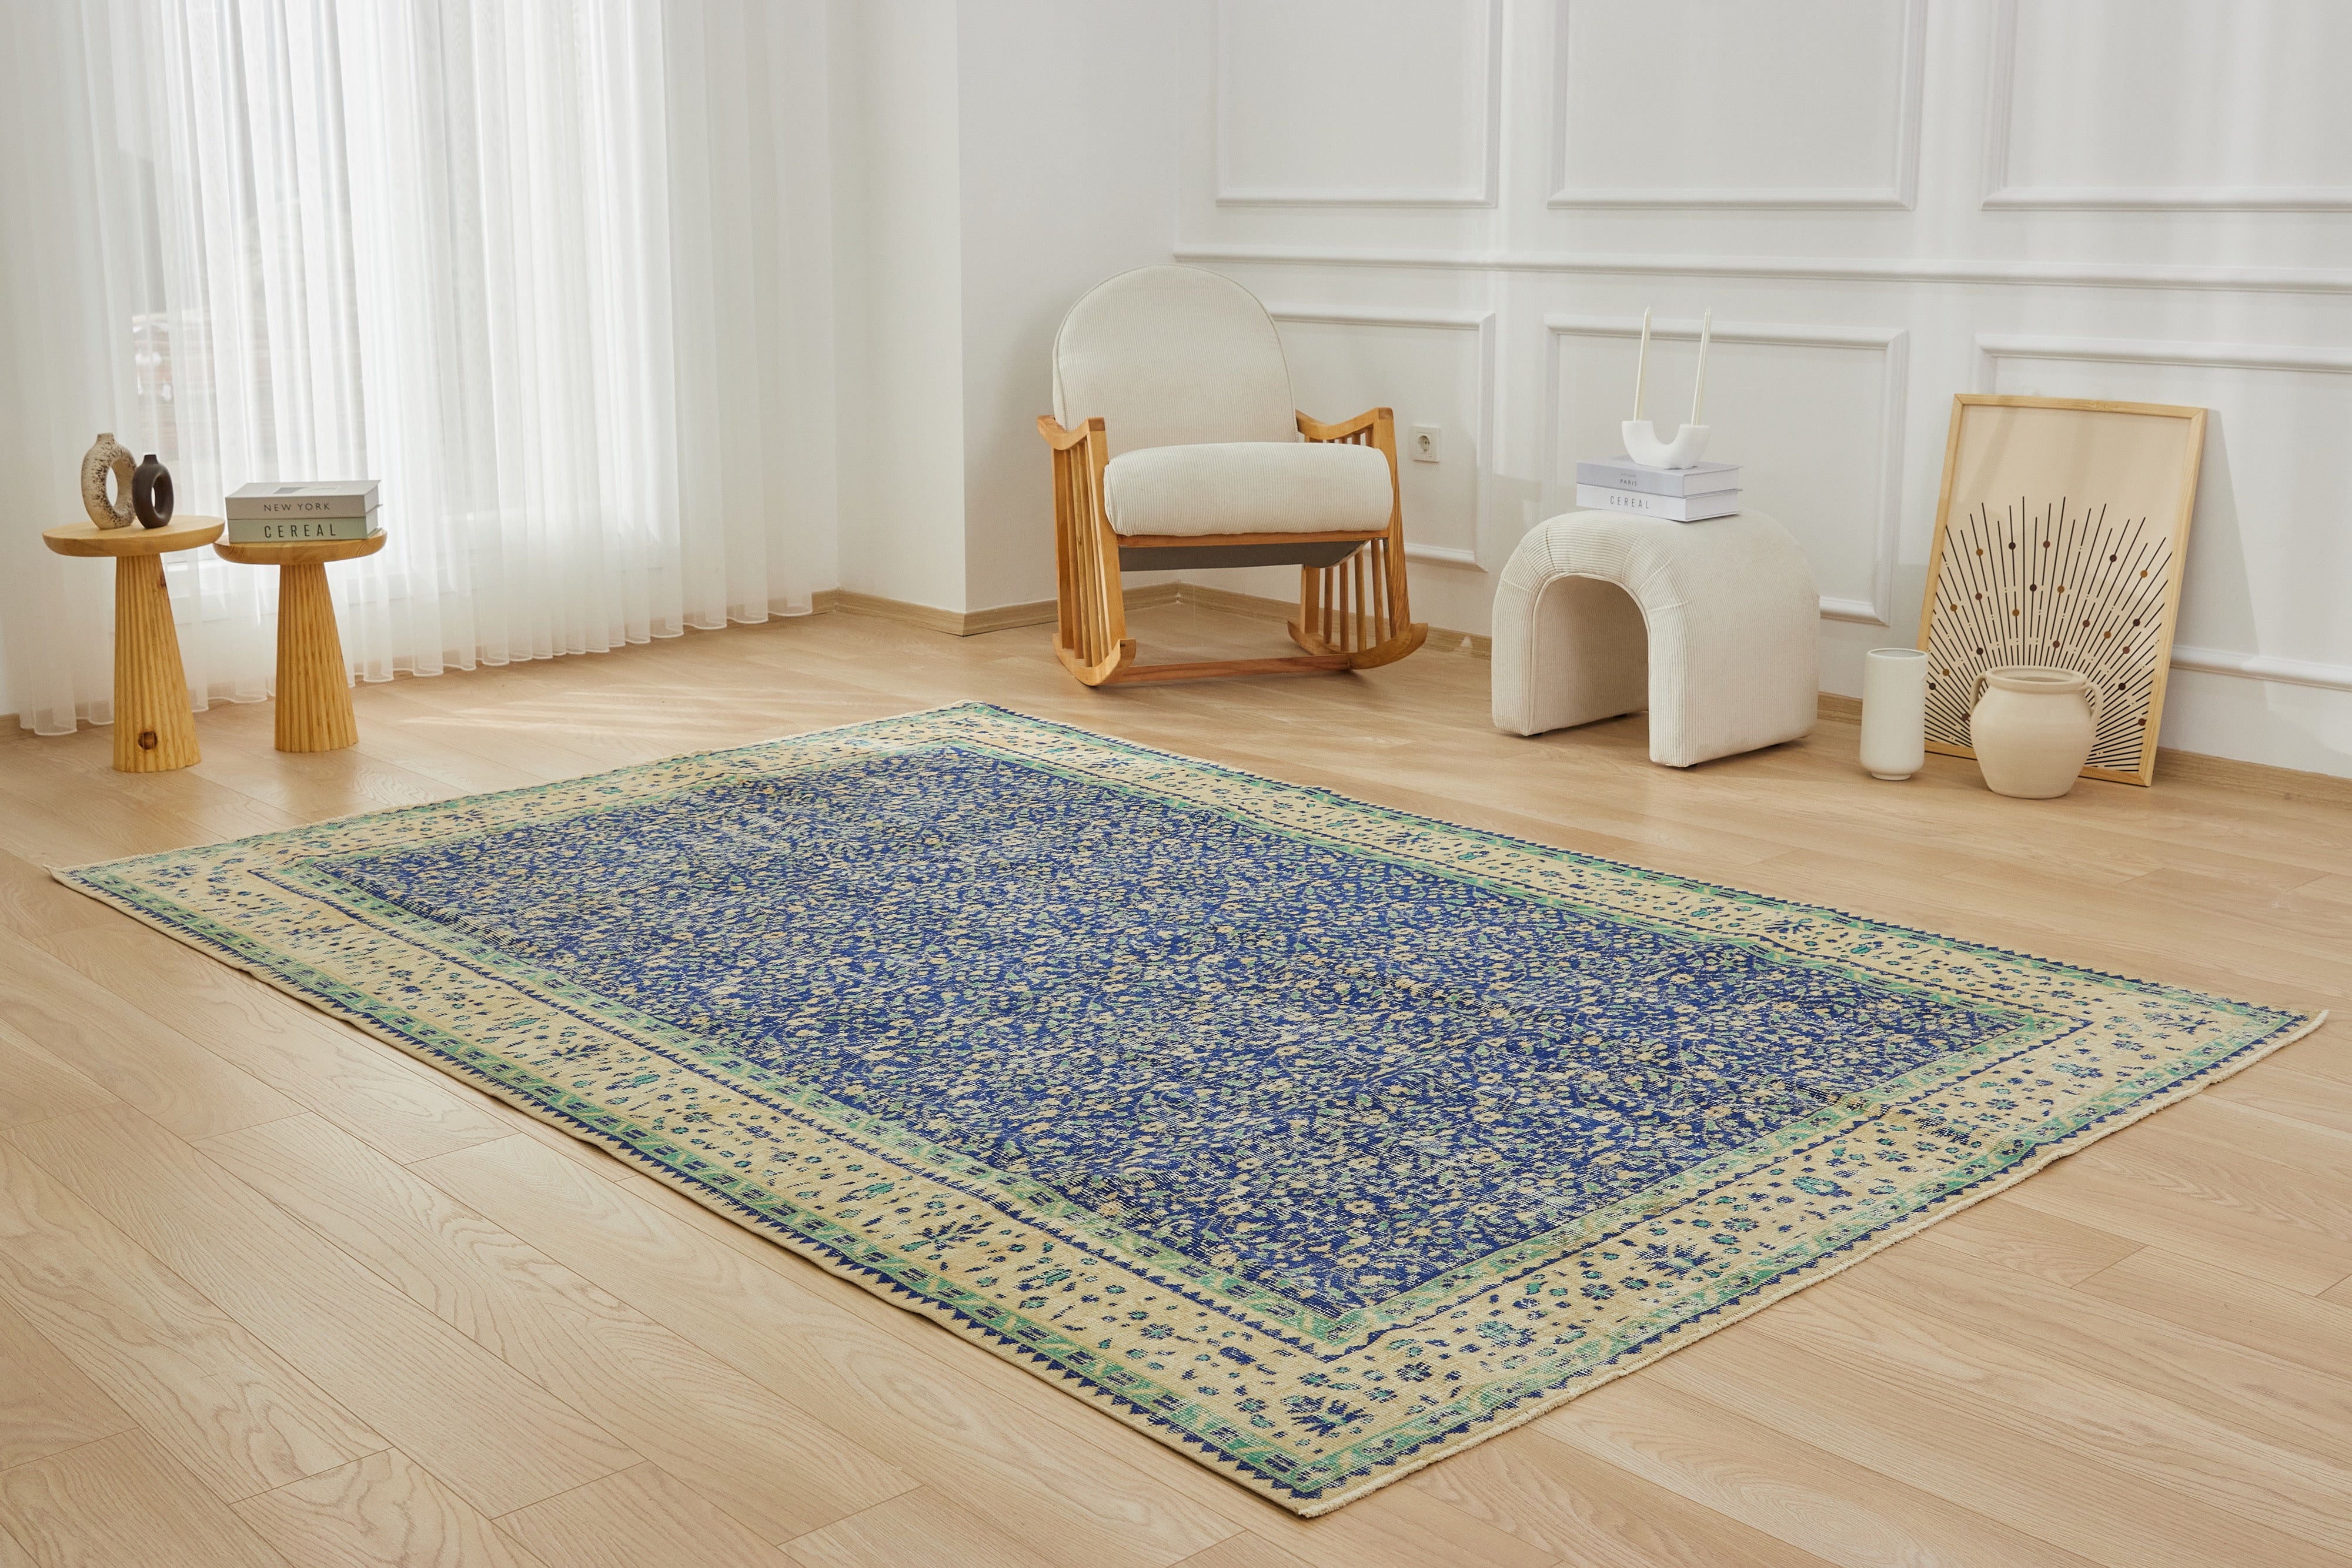 Antique washed Splendor - Zyanya's Professional Carpet Design